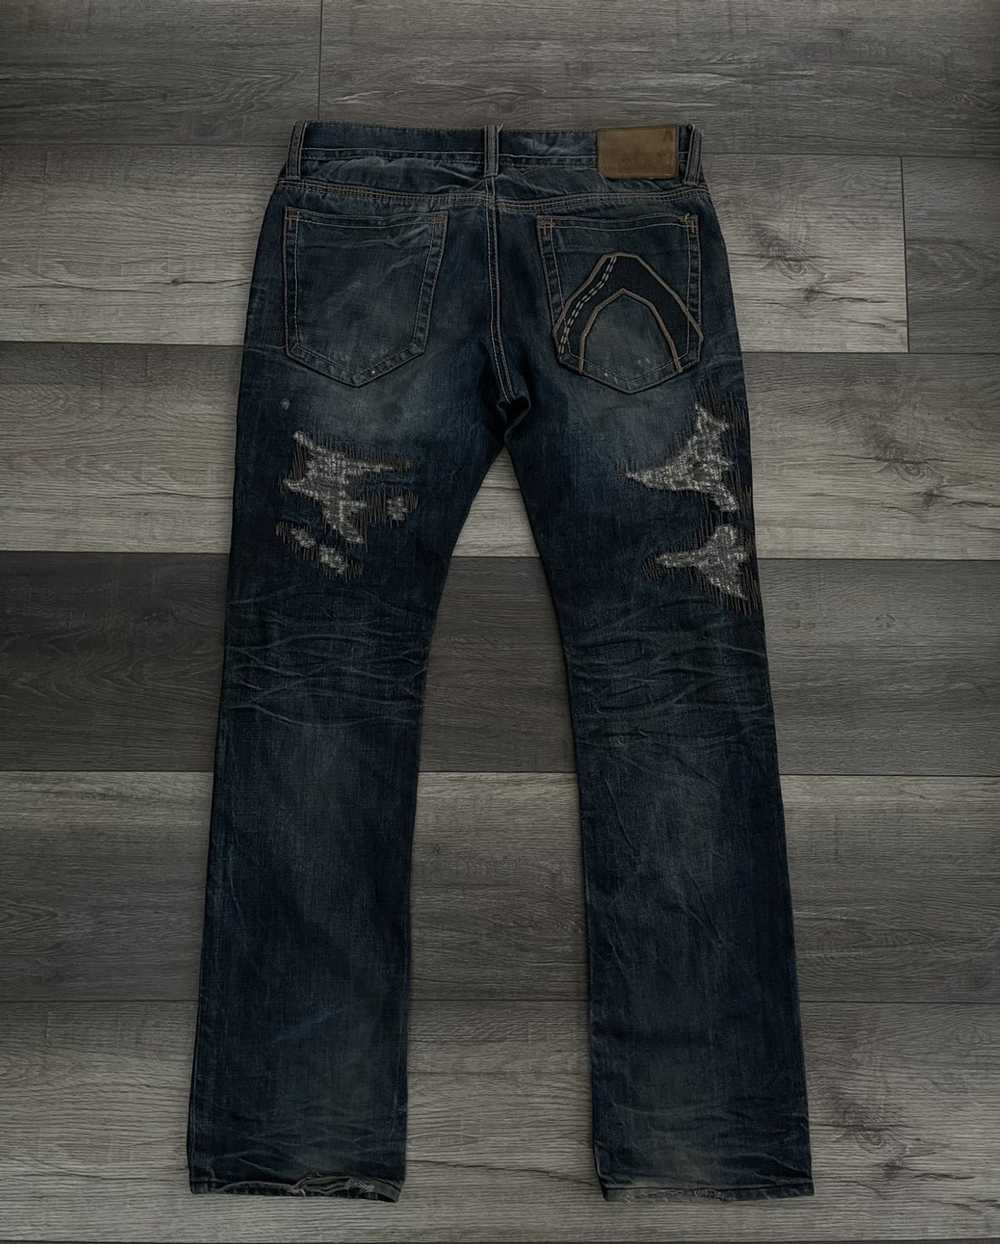 PPFM Buckaroo indigo jeans - image 4